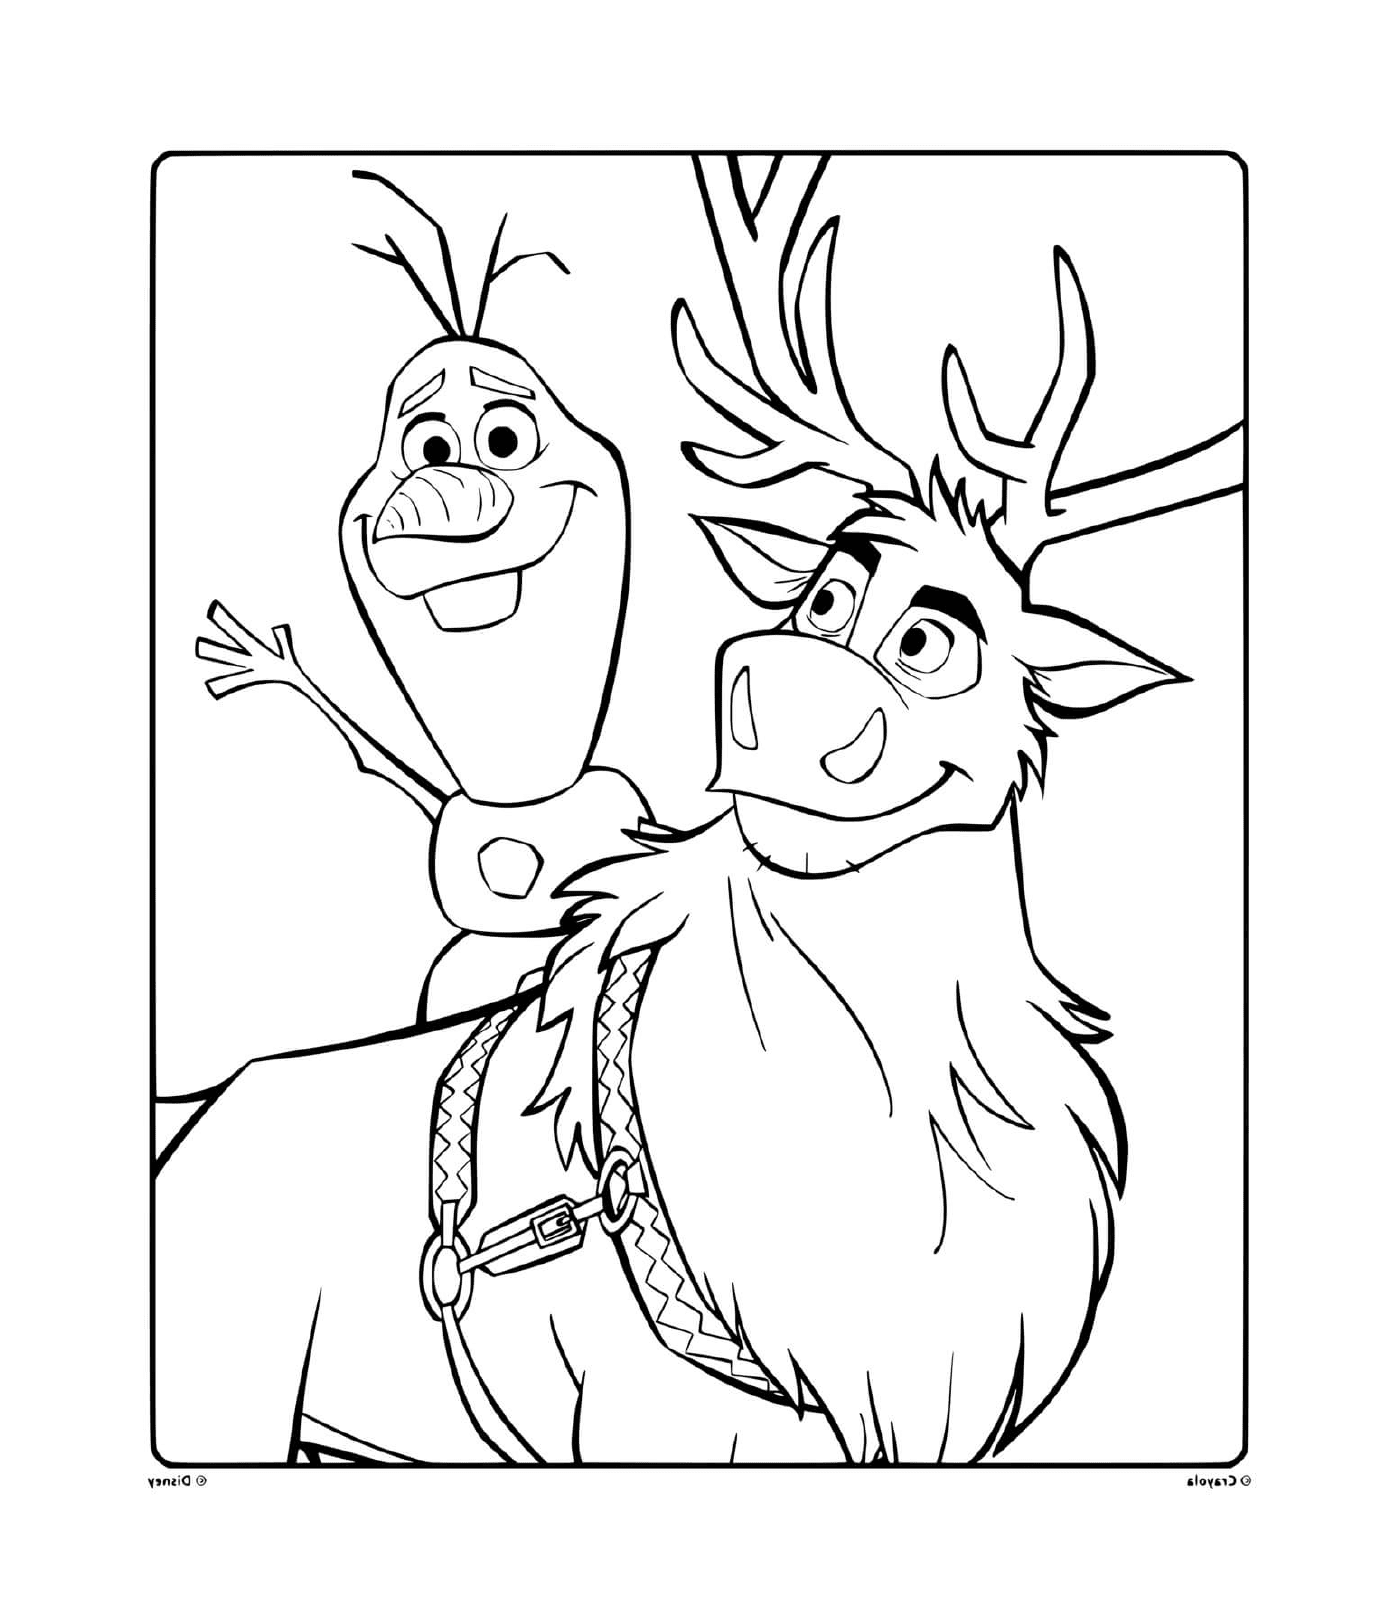   Olaf et Sven, compagnons 